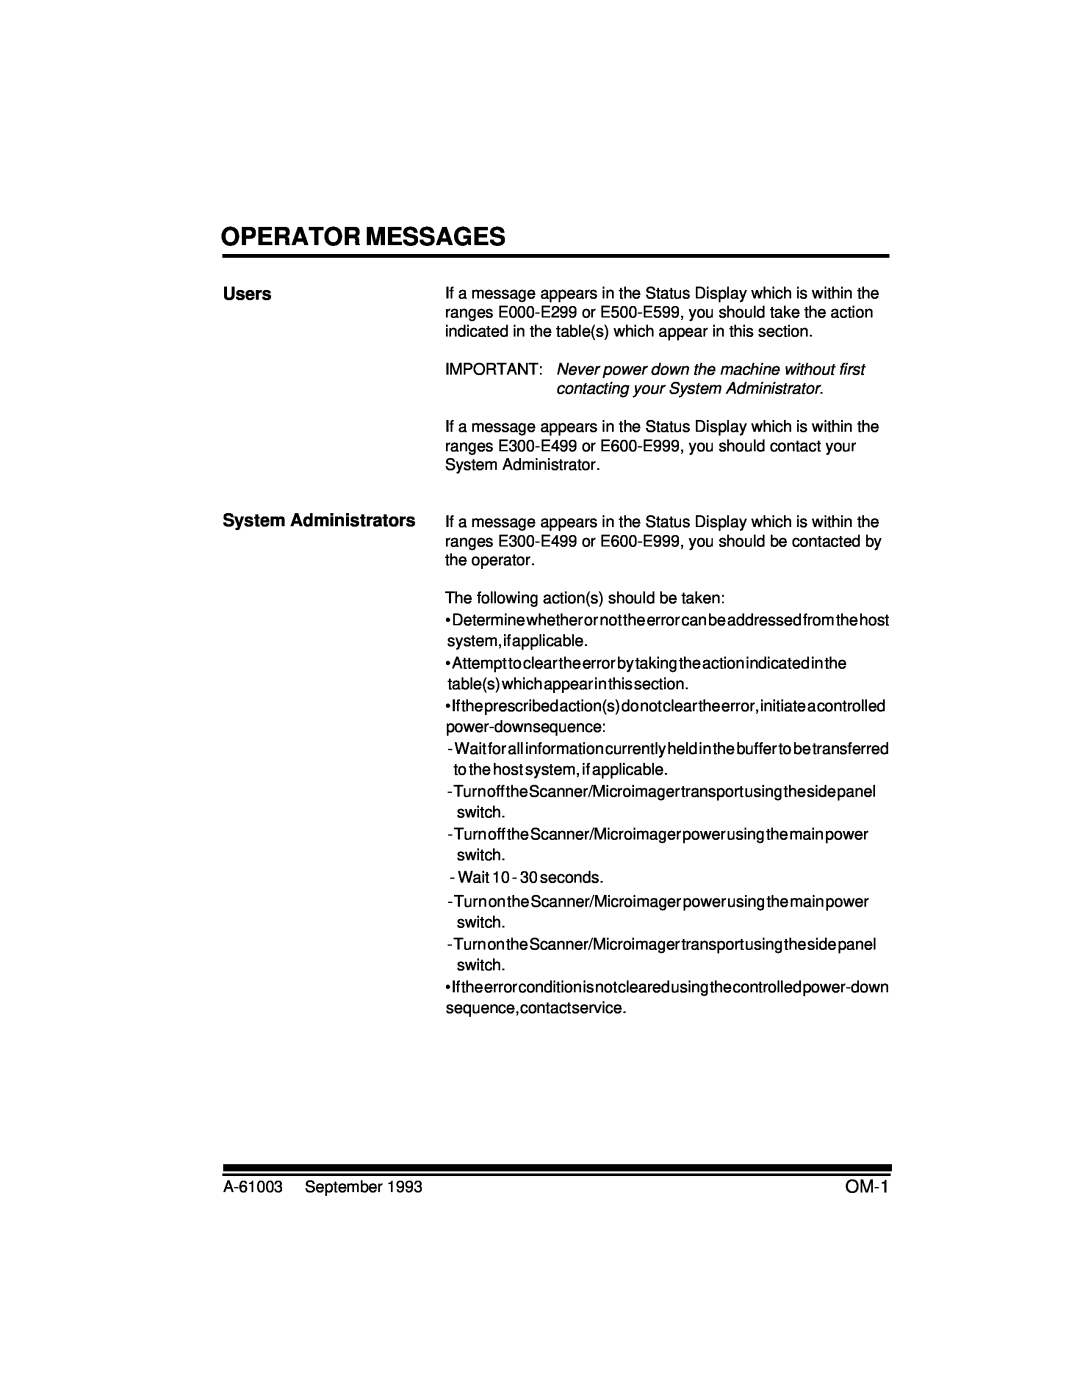 Kodak A-61003 manual Operator Messages, Users System Administrators, OM-1 